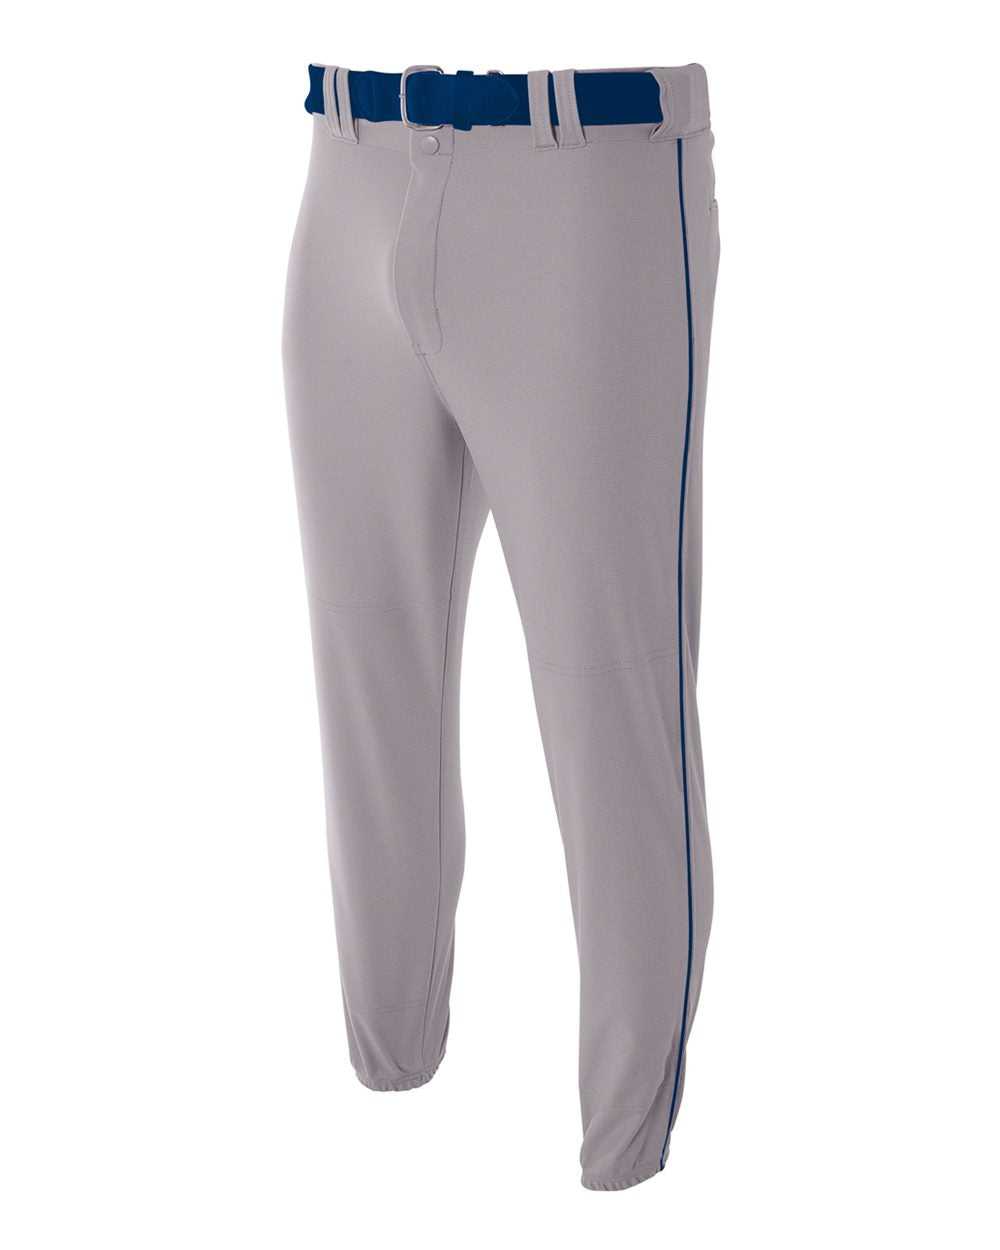 A4 N6178 Pro Style Elastic Bottom Baseball Pant - Gray Navy - HIT a Double